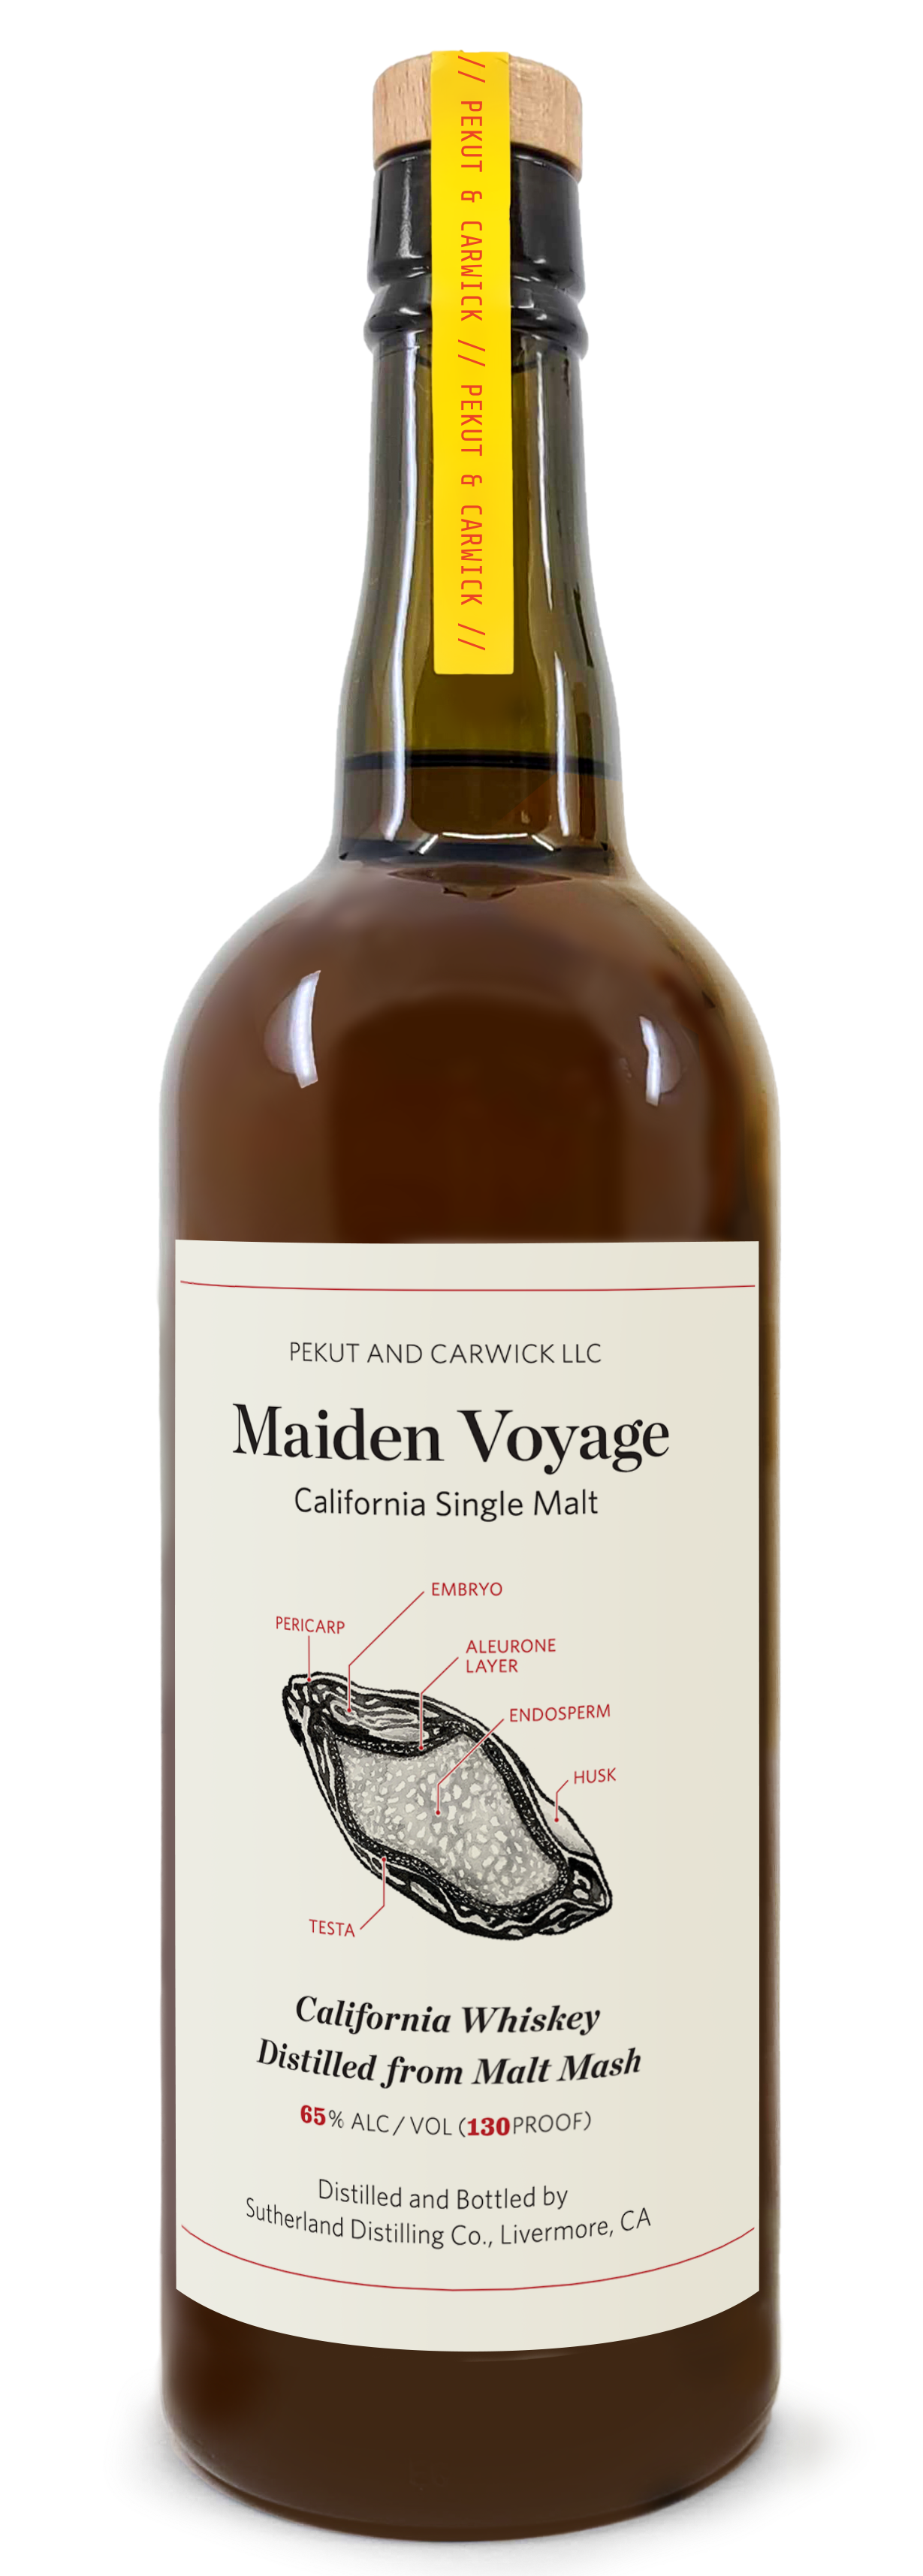 A bottle of Pekut and Carwick Maiden Voyage Single Malt Whiskey